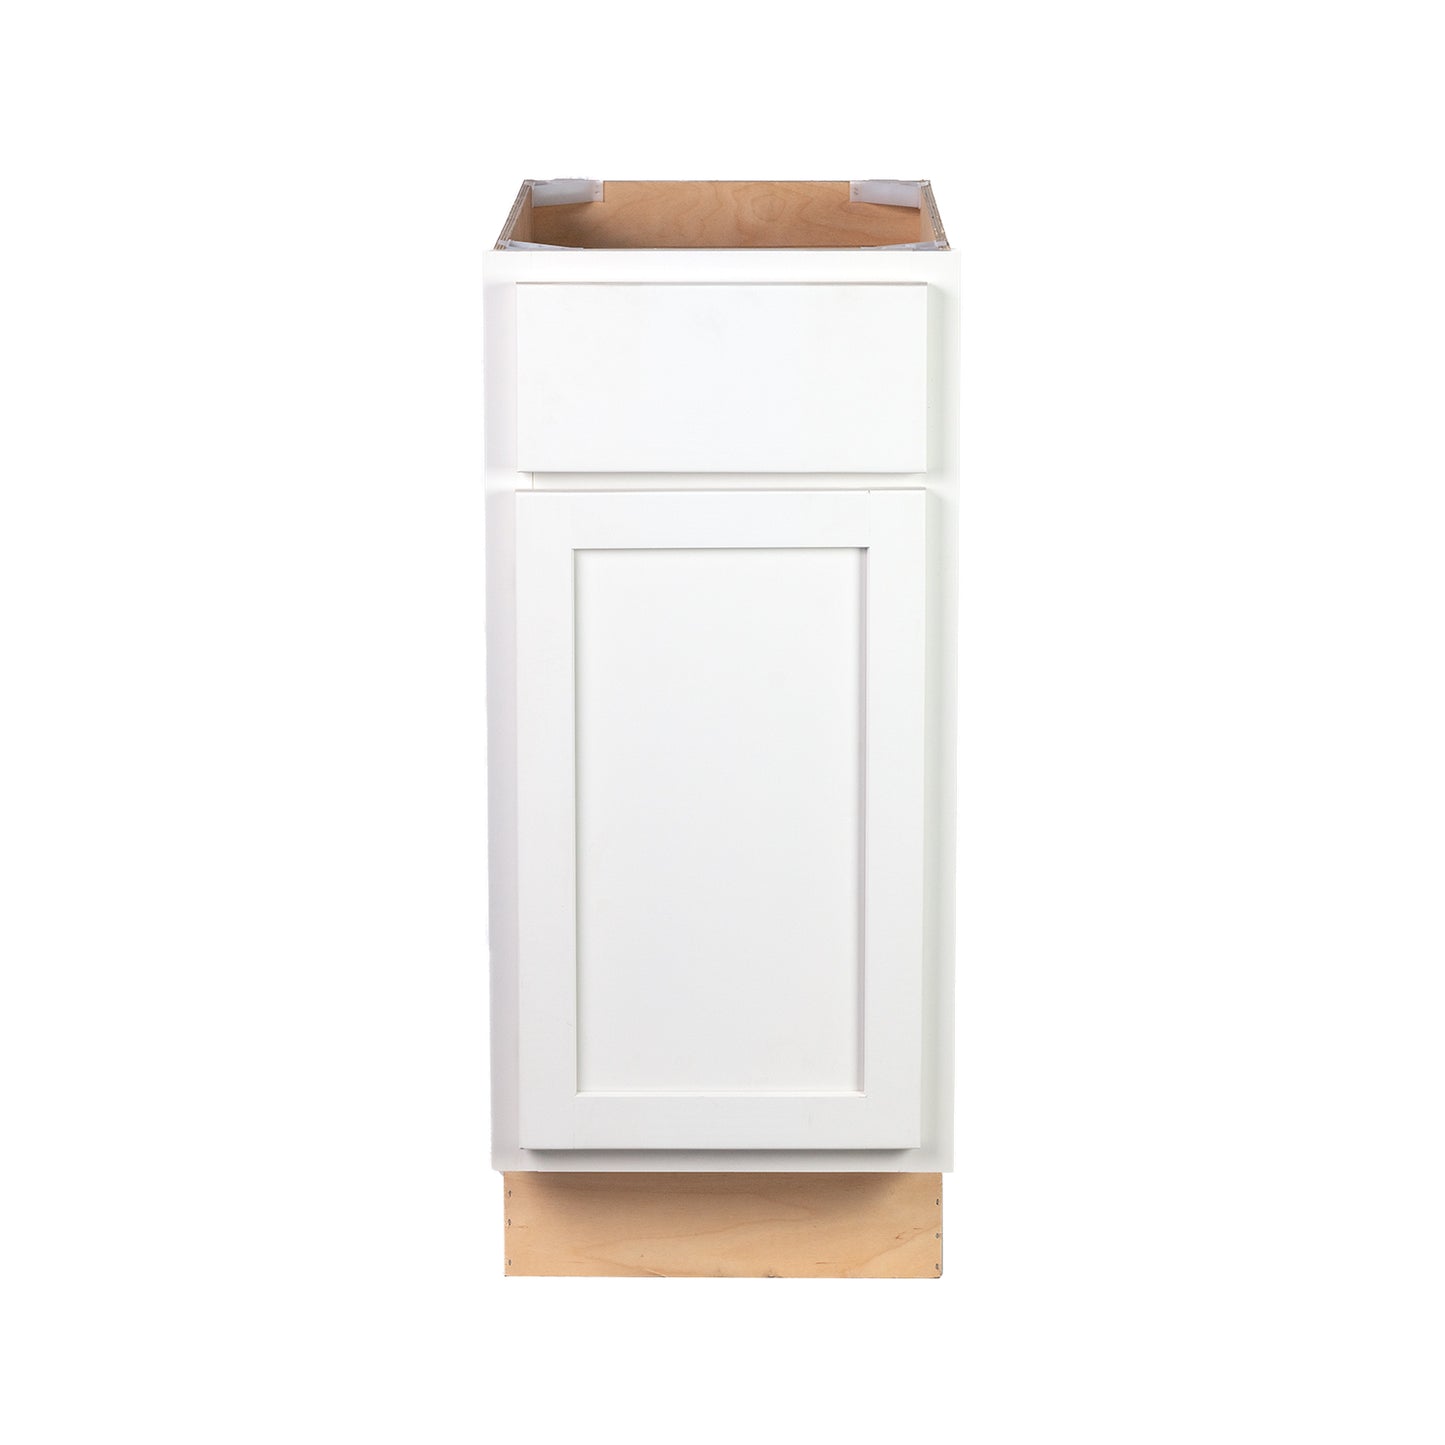 Quicklock RTA (Ready-to-Assemble) Pure White Base Cabinet | 24"Wx34.5"Hx24"D